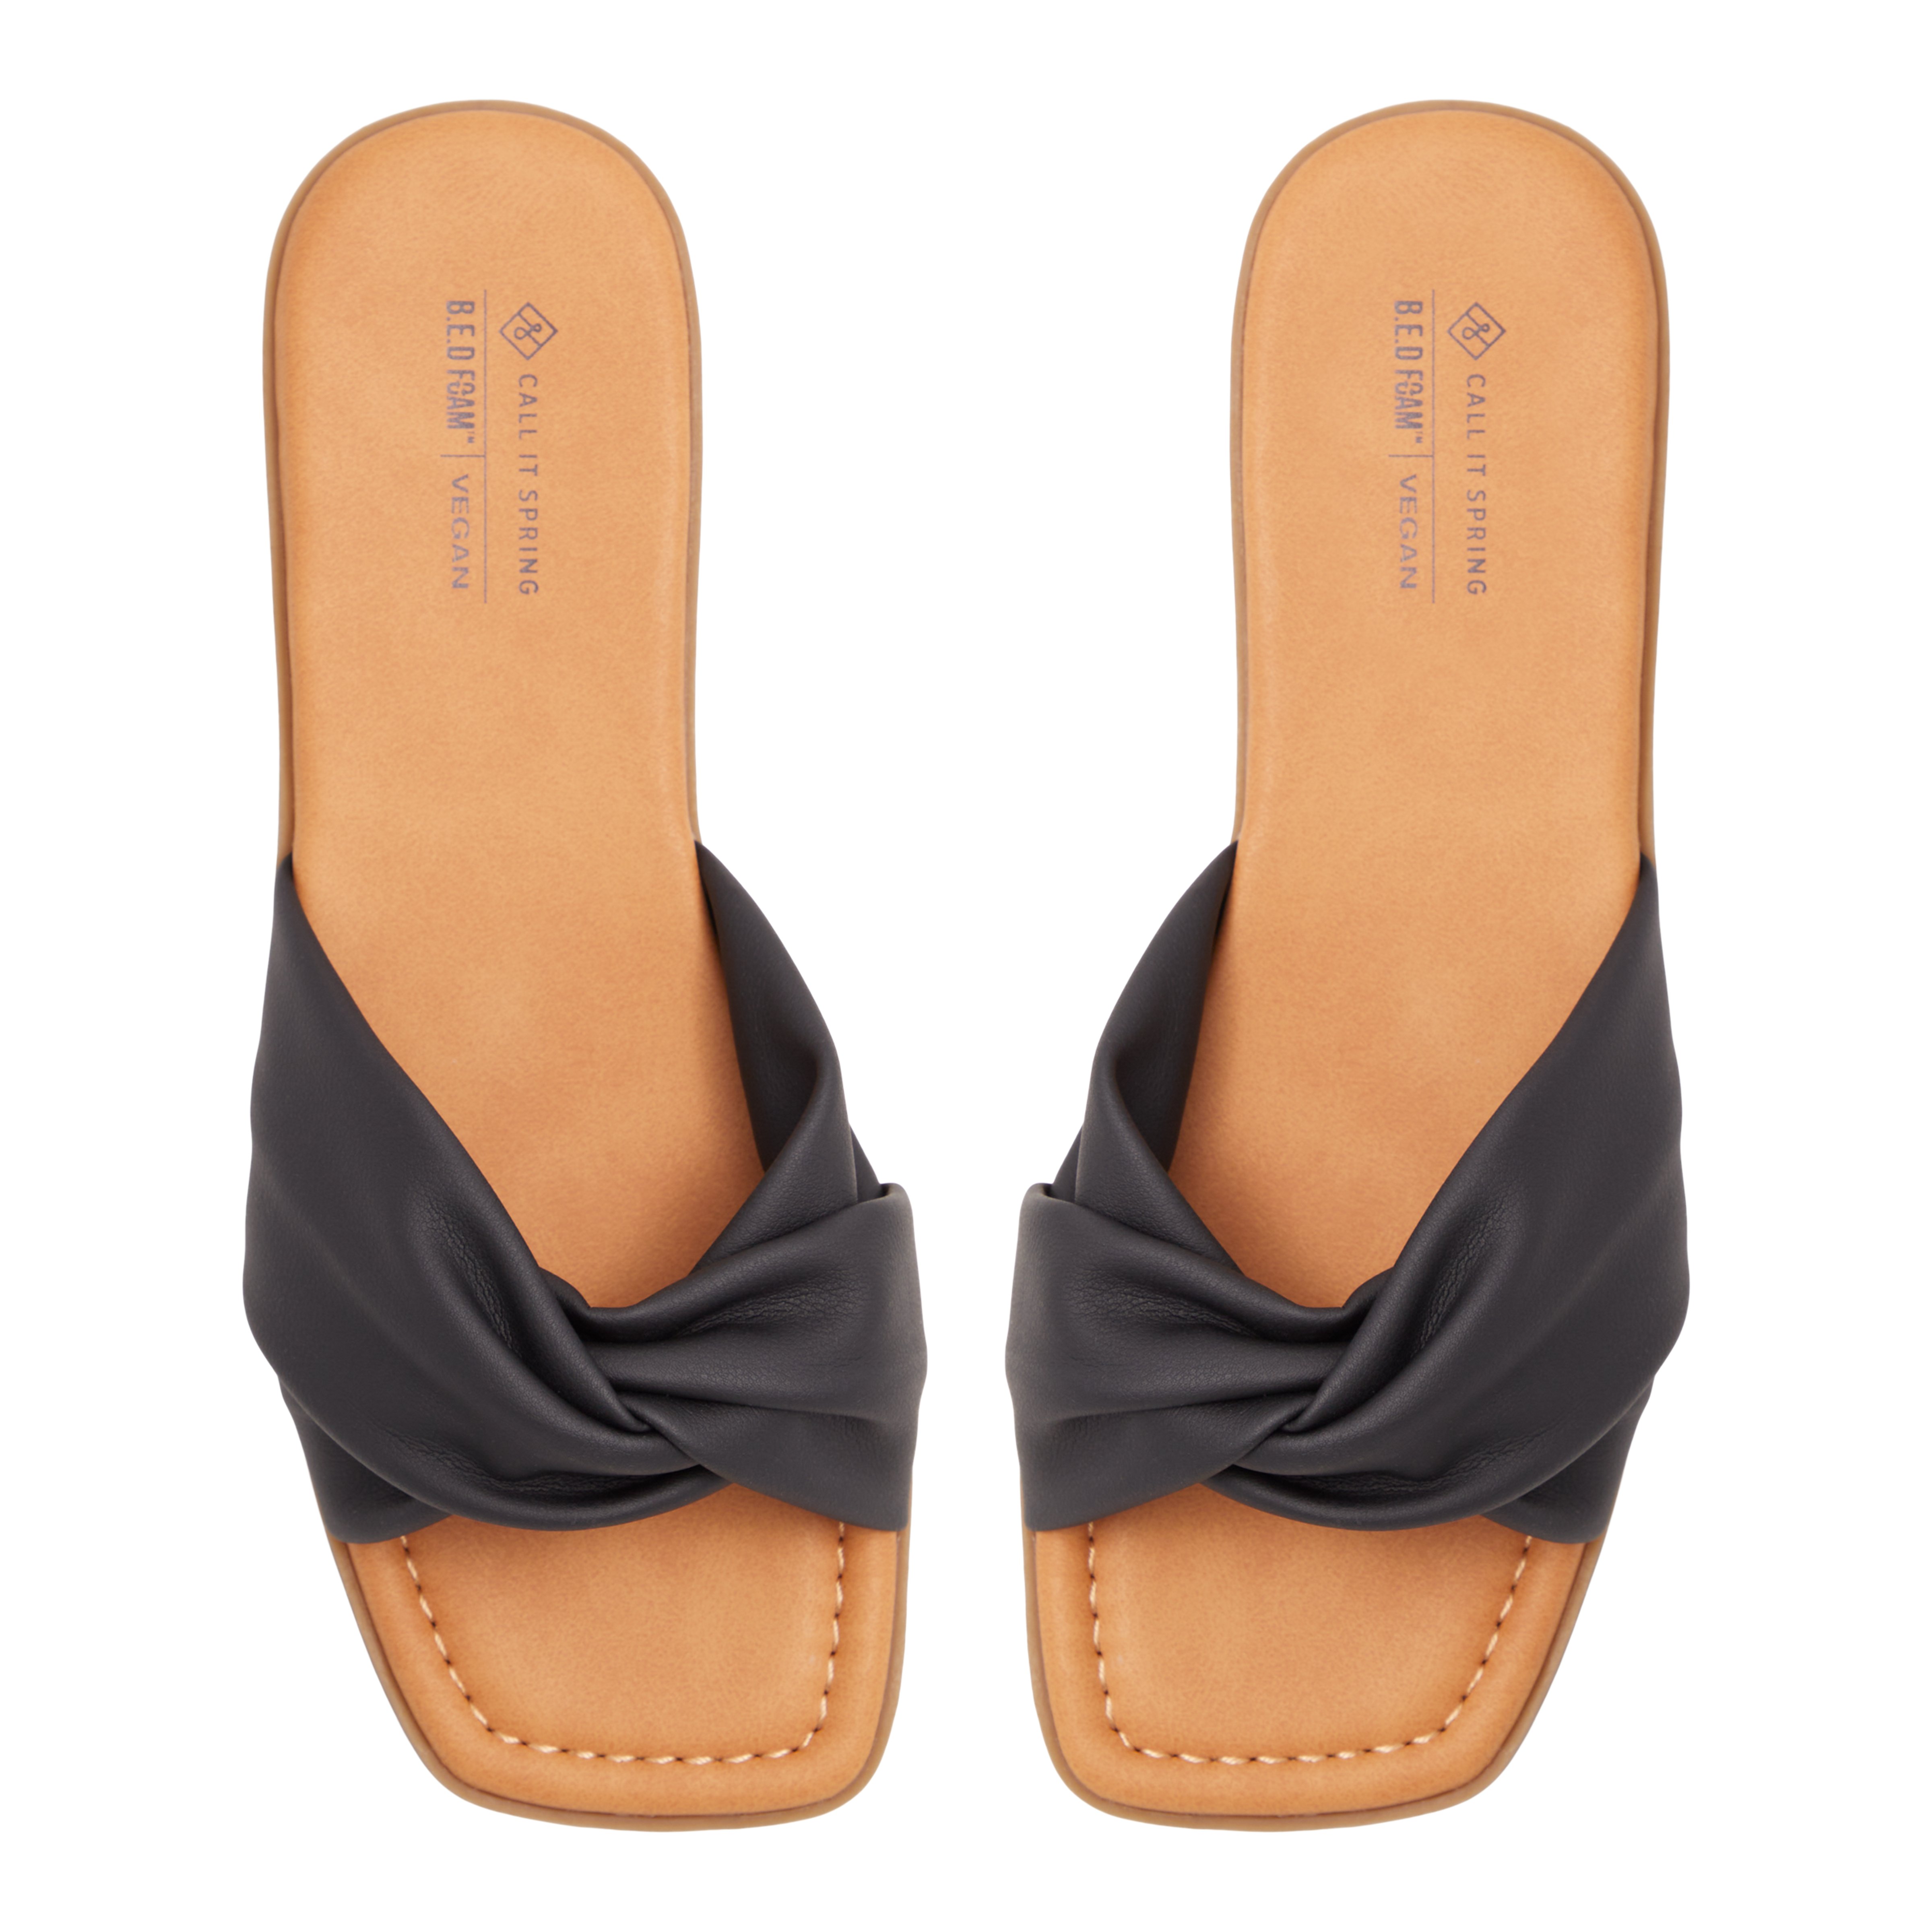 Peaches Women's Black Flat Sandals